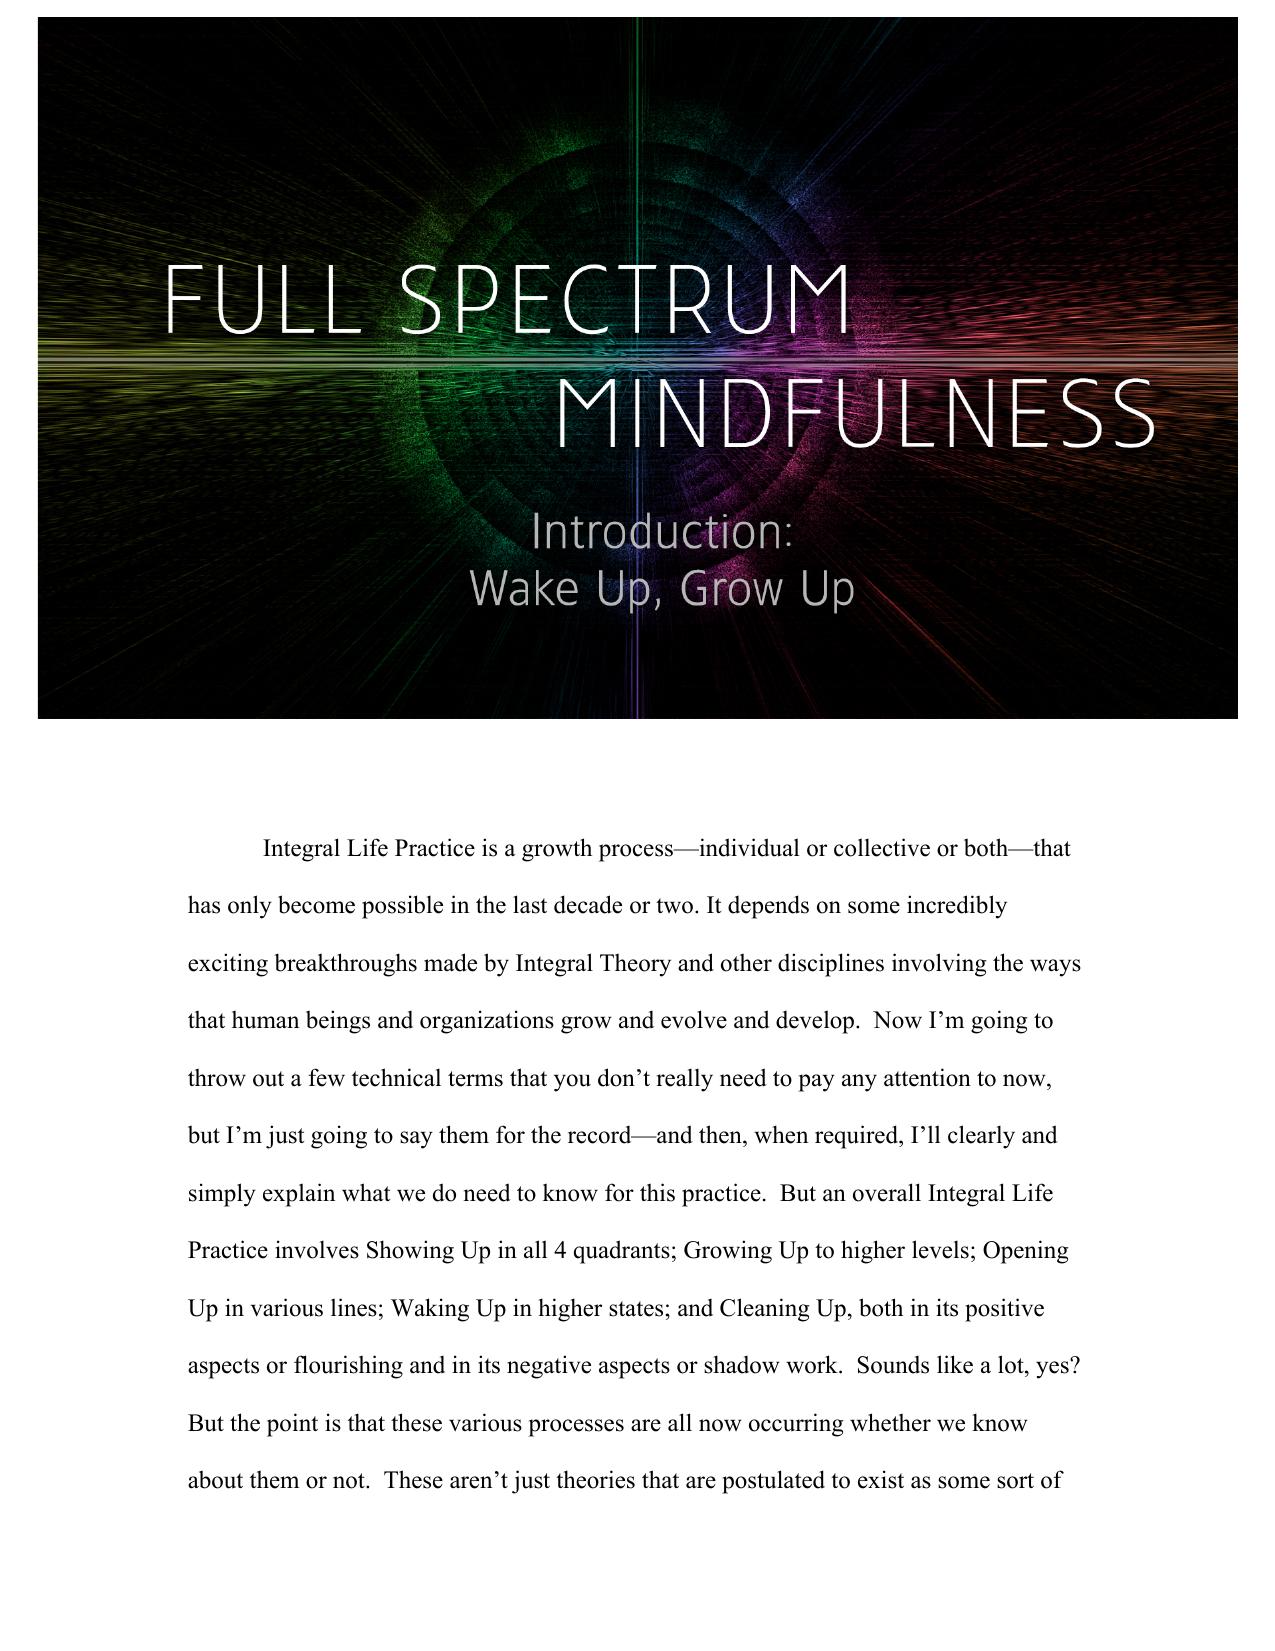 Full Spectrum Mindfulness - Essay